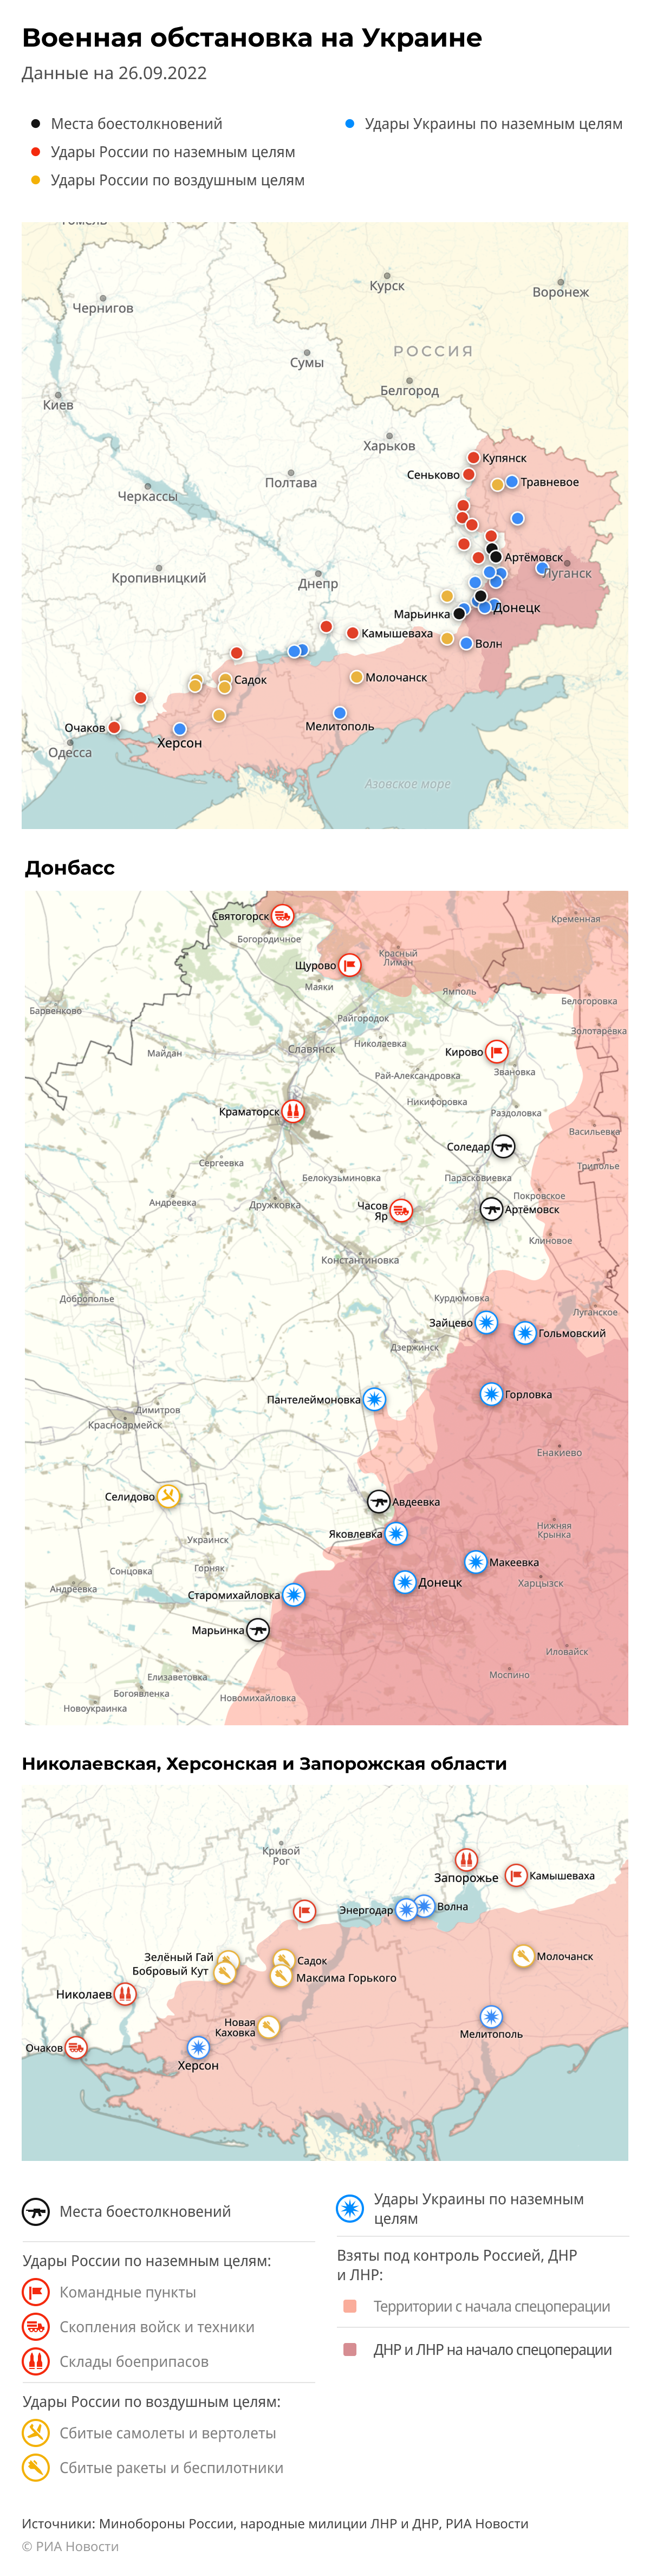 Karta specoperacii Vooružennыh sil Rossii na Ukraine na 26.09.2022